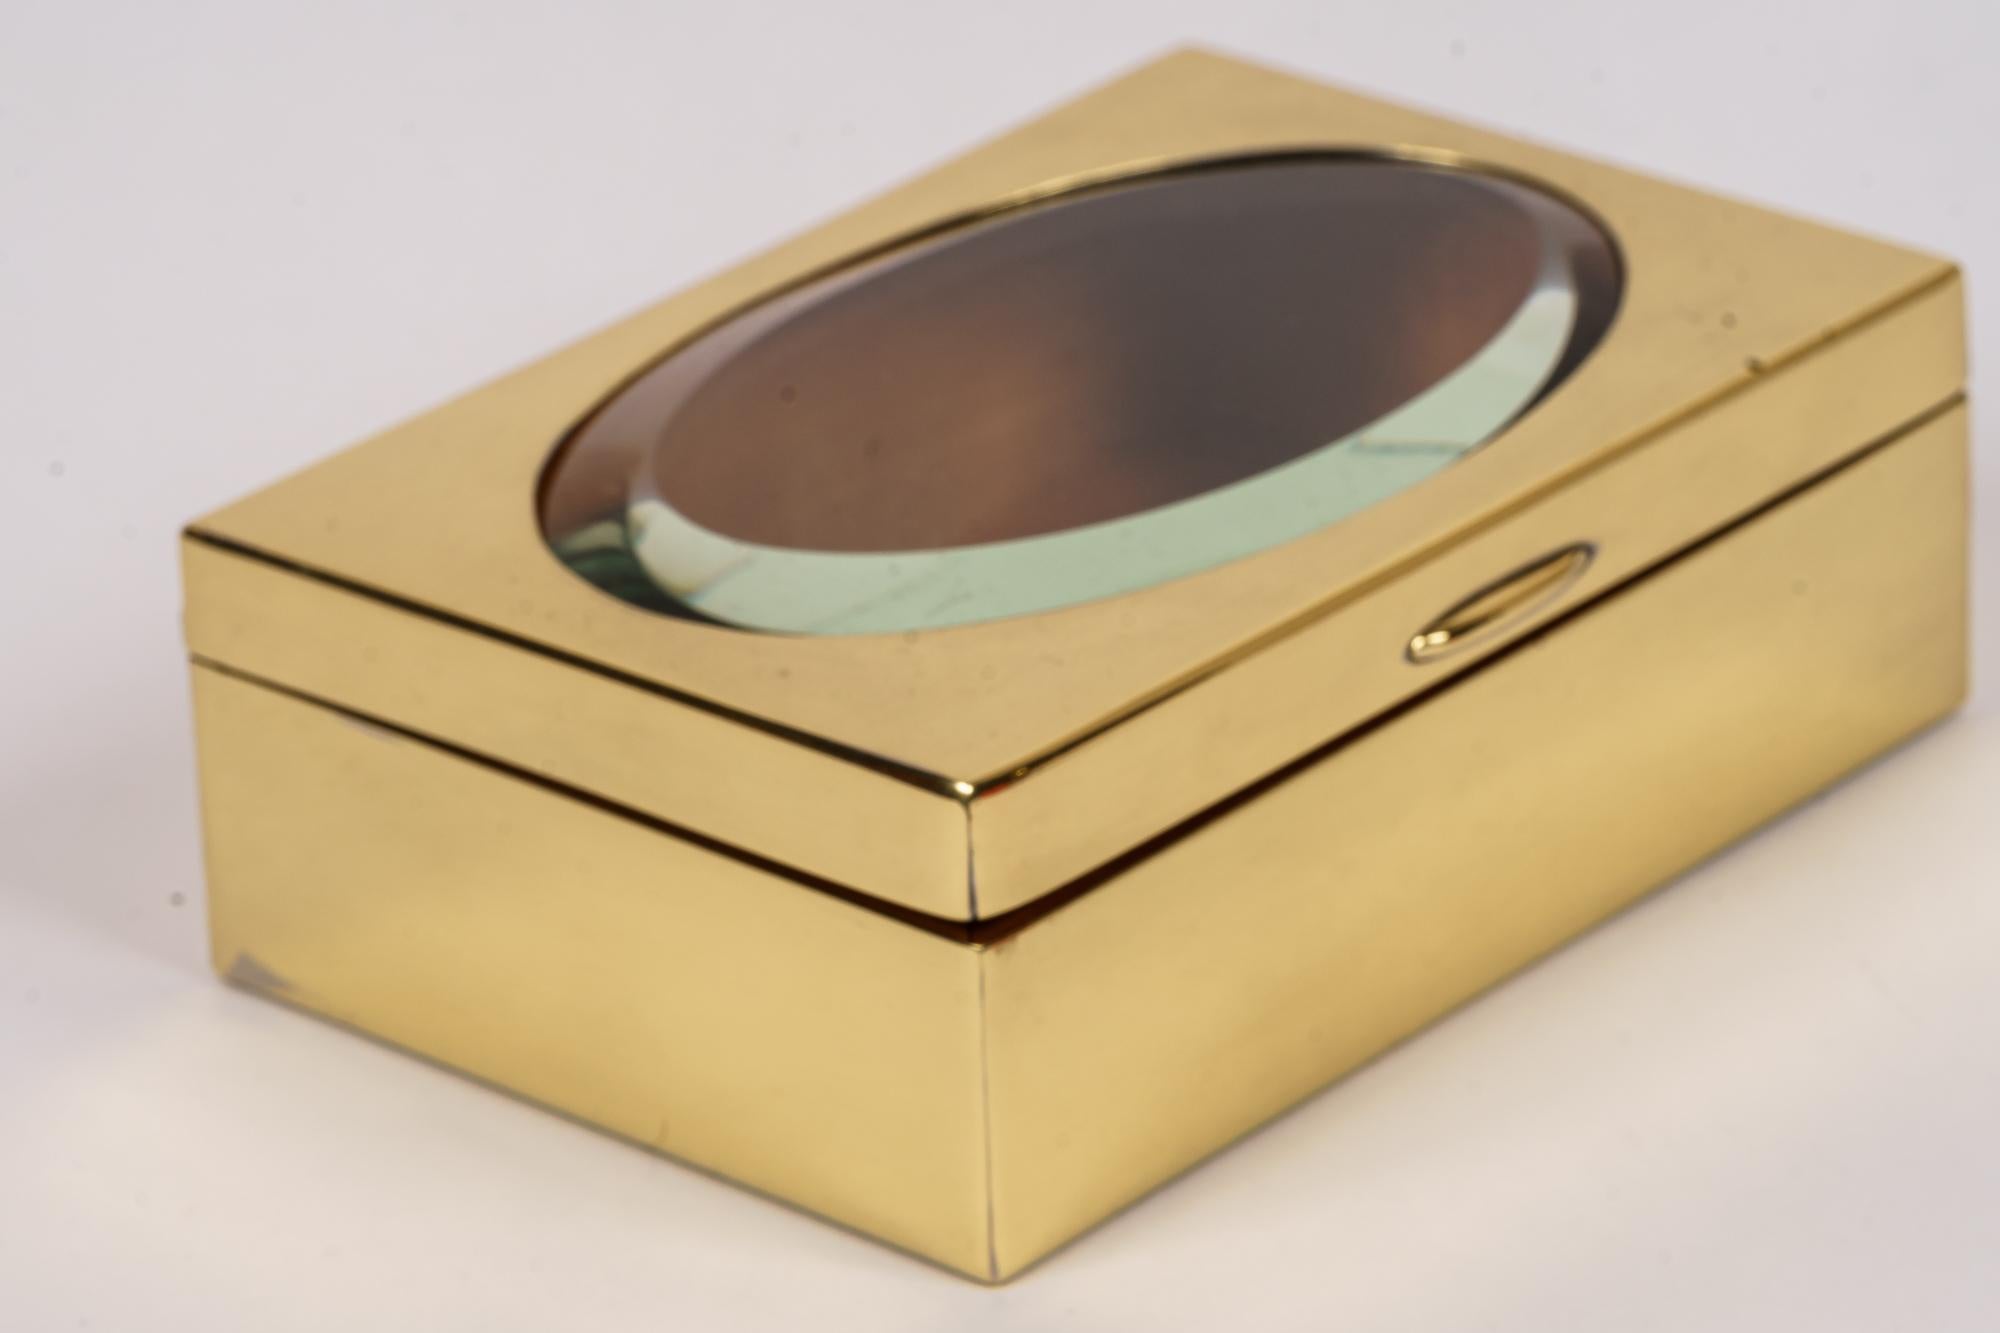 Art Deco Jewelry Box vienna around 1920s.
Polished and stove enameled.
Cut glass.